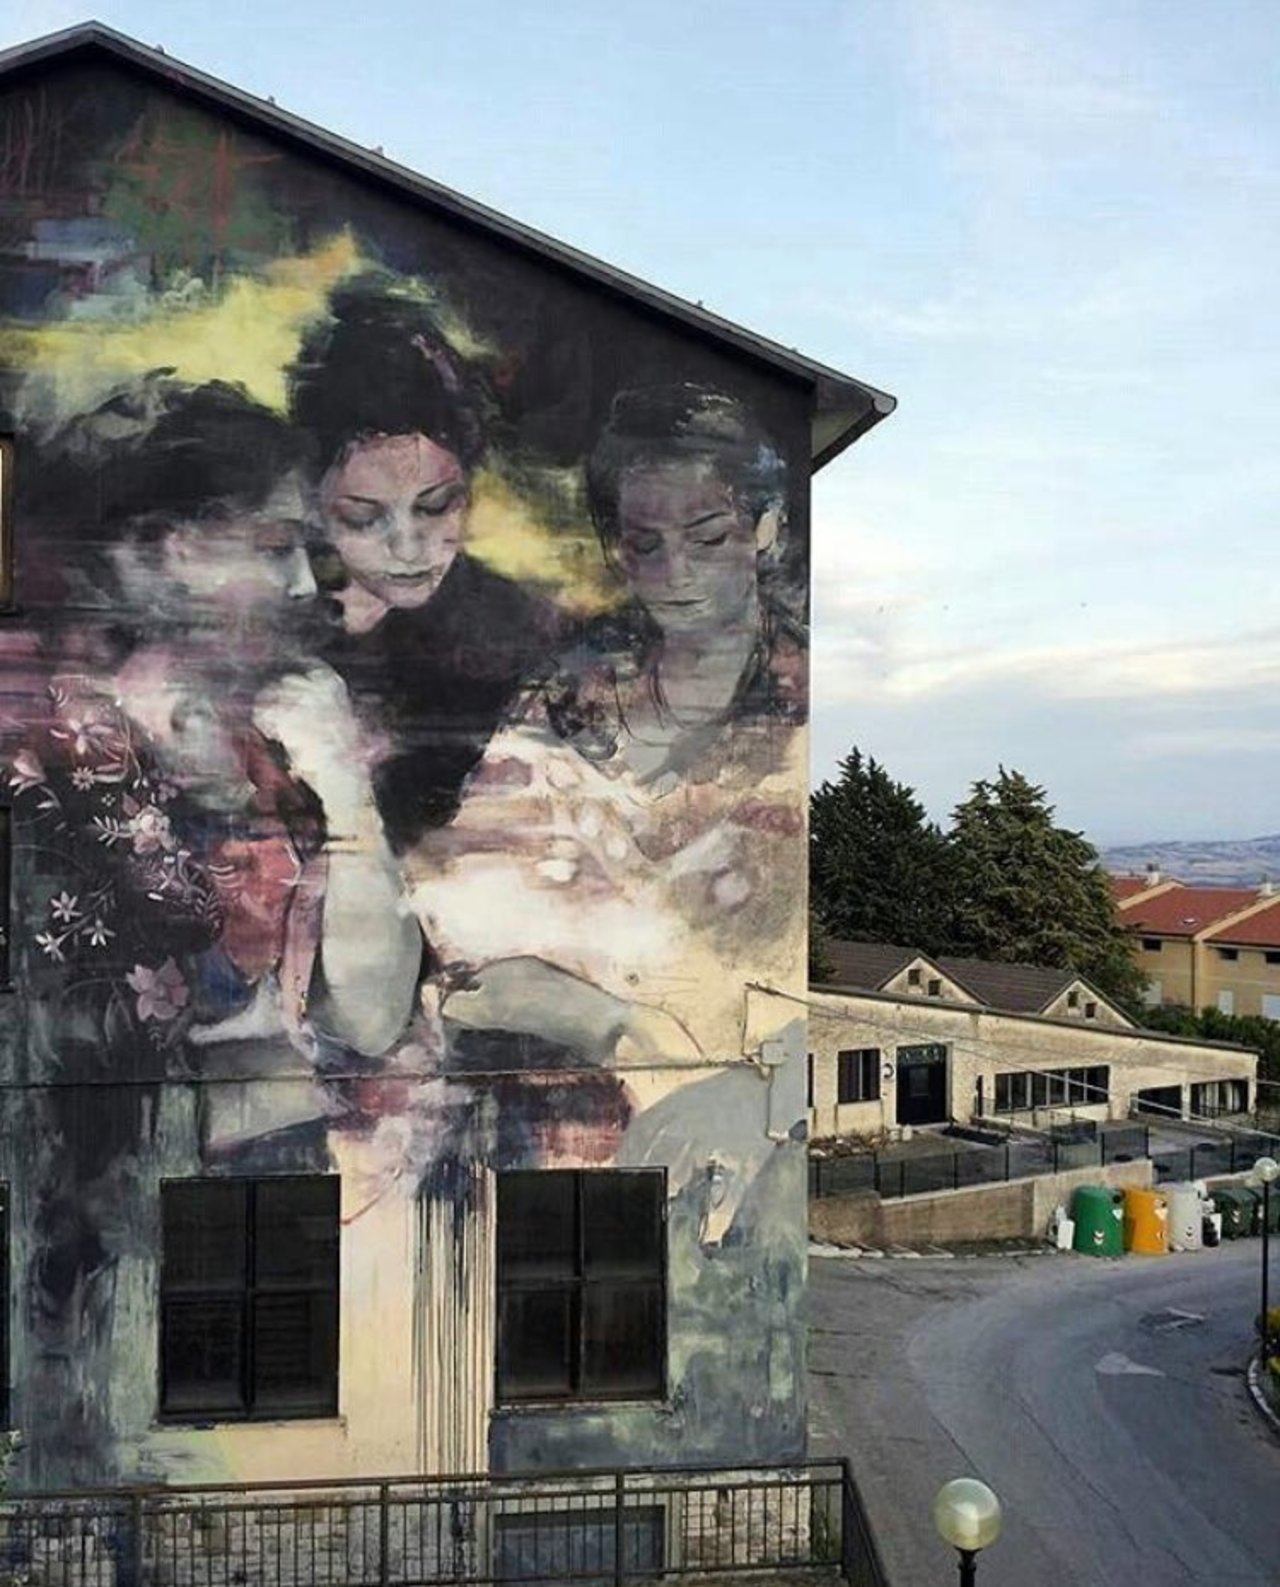 New Street Art by Bosoletti found in Italy #art #graffiti #mural #streetart https://t.co/8fLbwQymrC